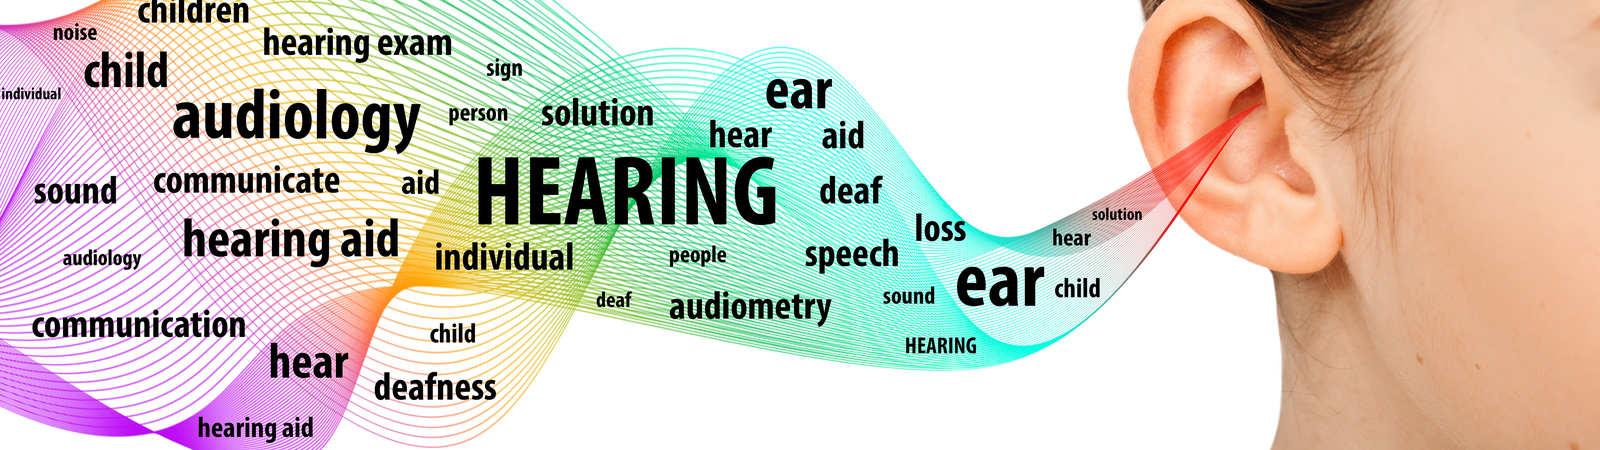 Ear that is hearing children, noicse, hearing exam, audiology